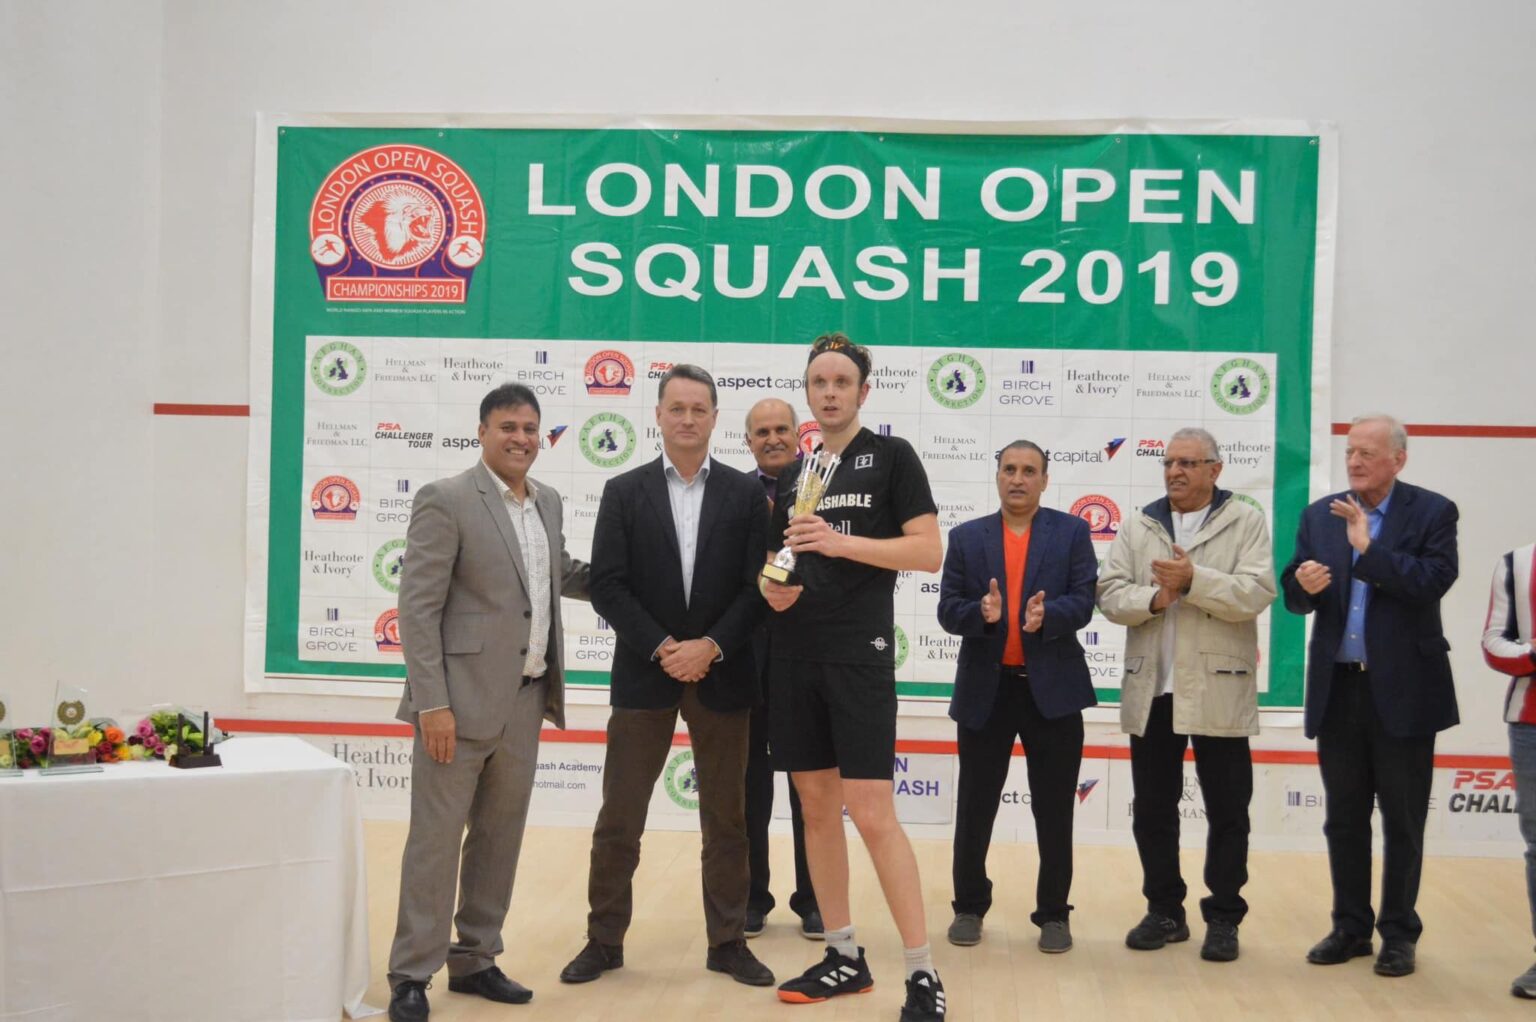 London Open Squash Let's play